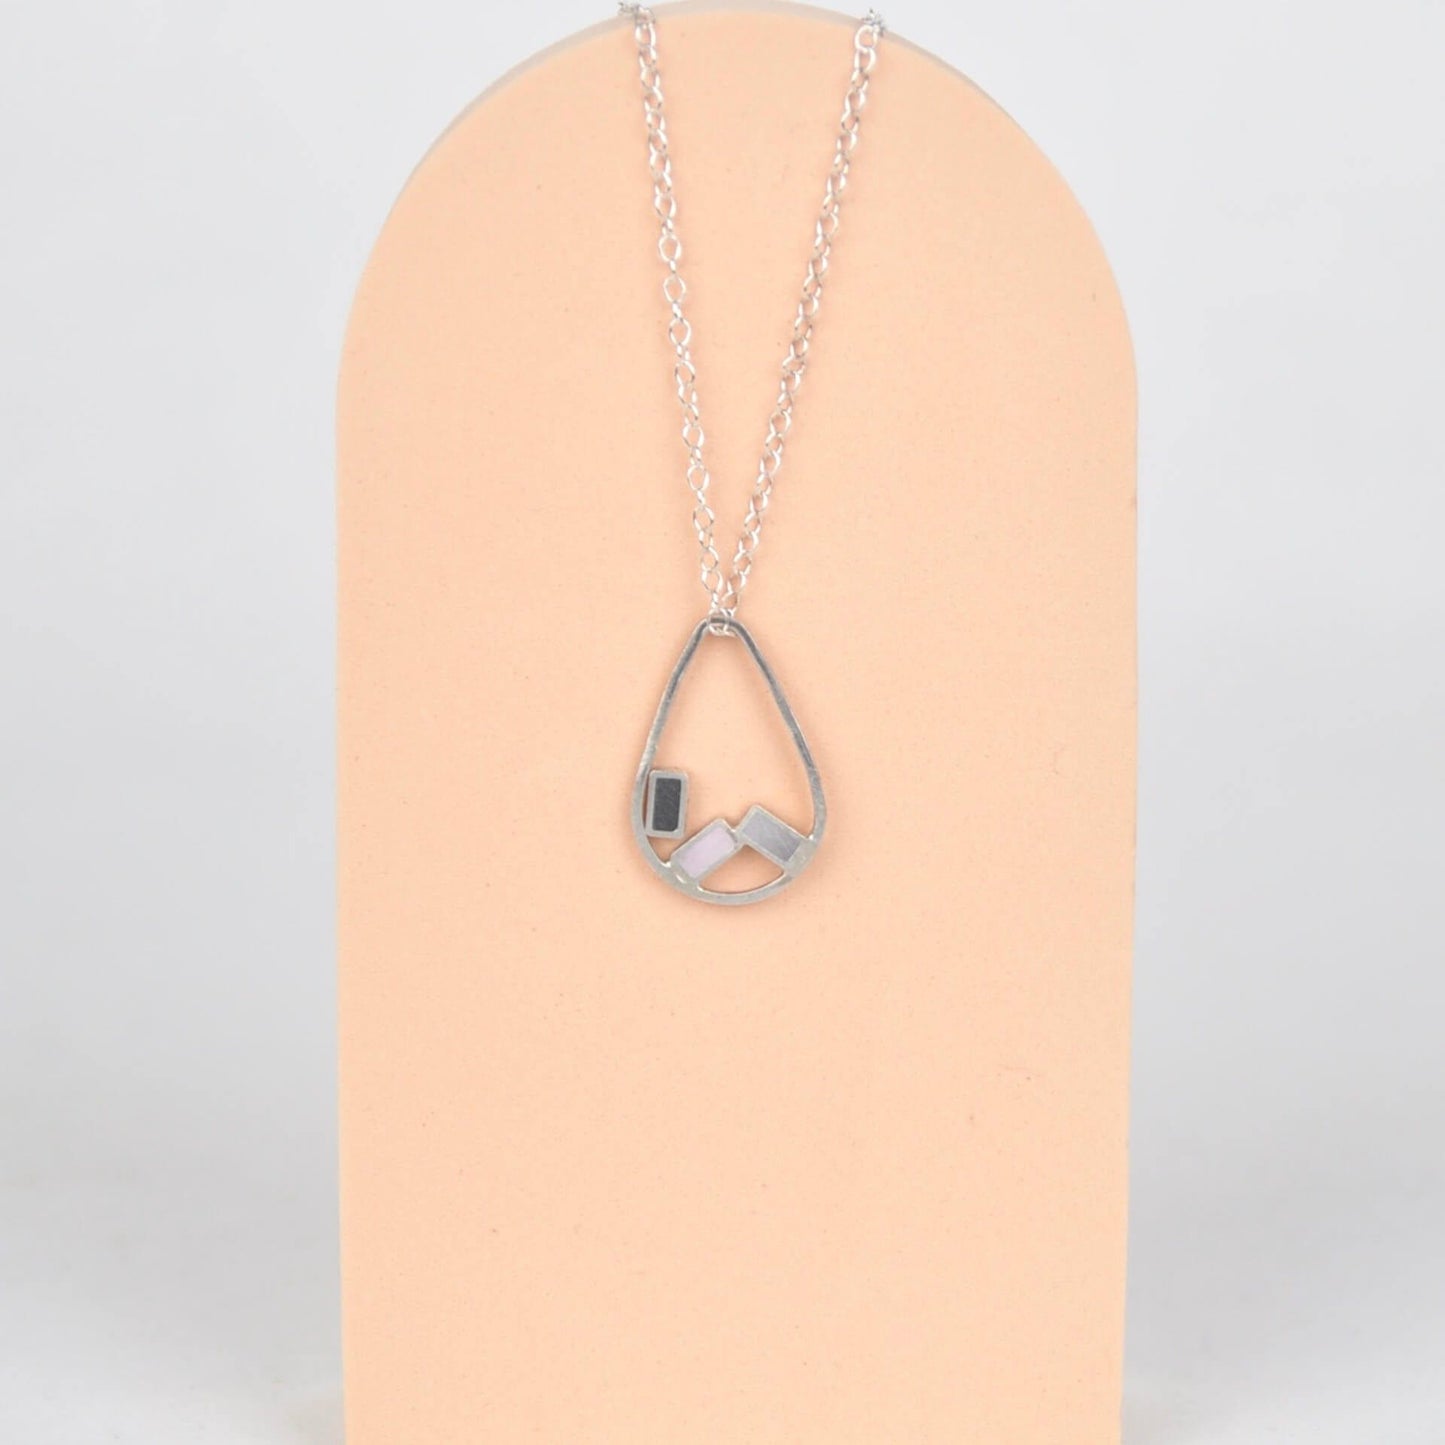 Clare Lloyd Earrings Pink/Light grey/Dark Grey Rectangles Small Teardrop Inside Dot Pendant Necklace